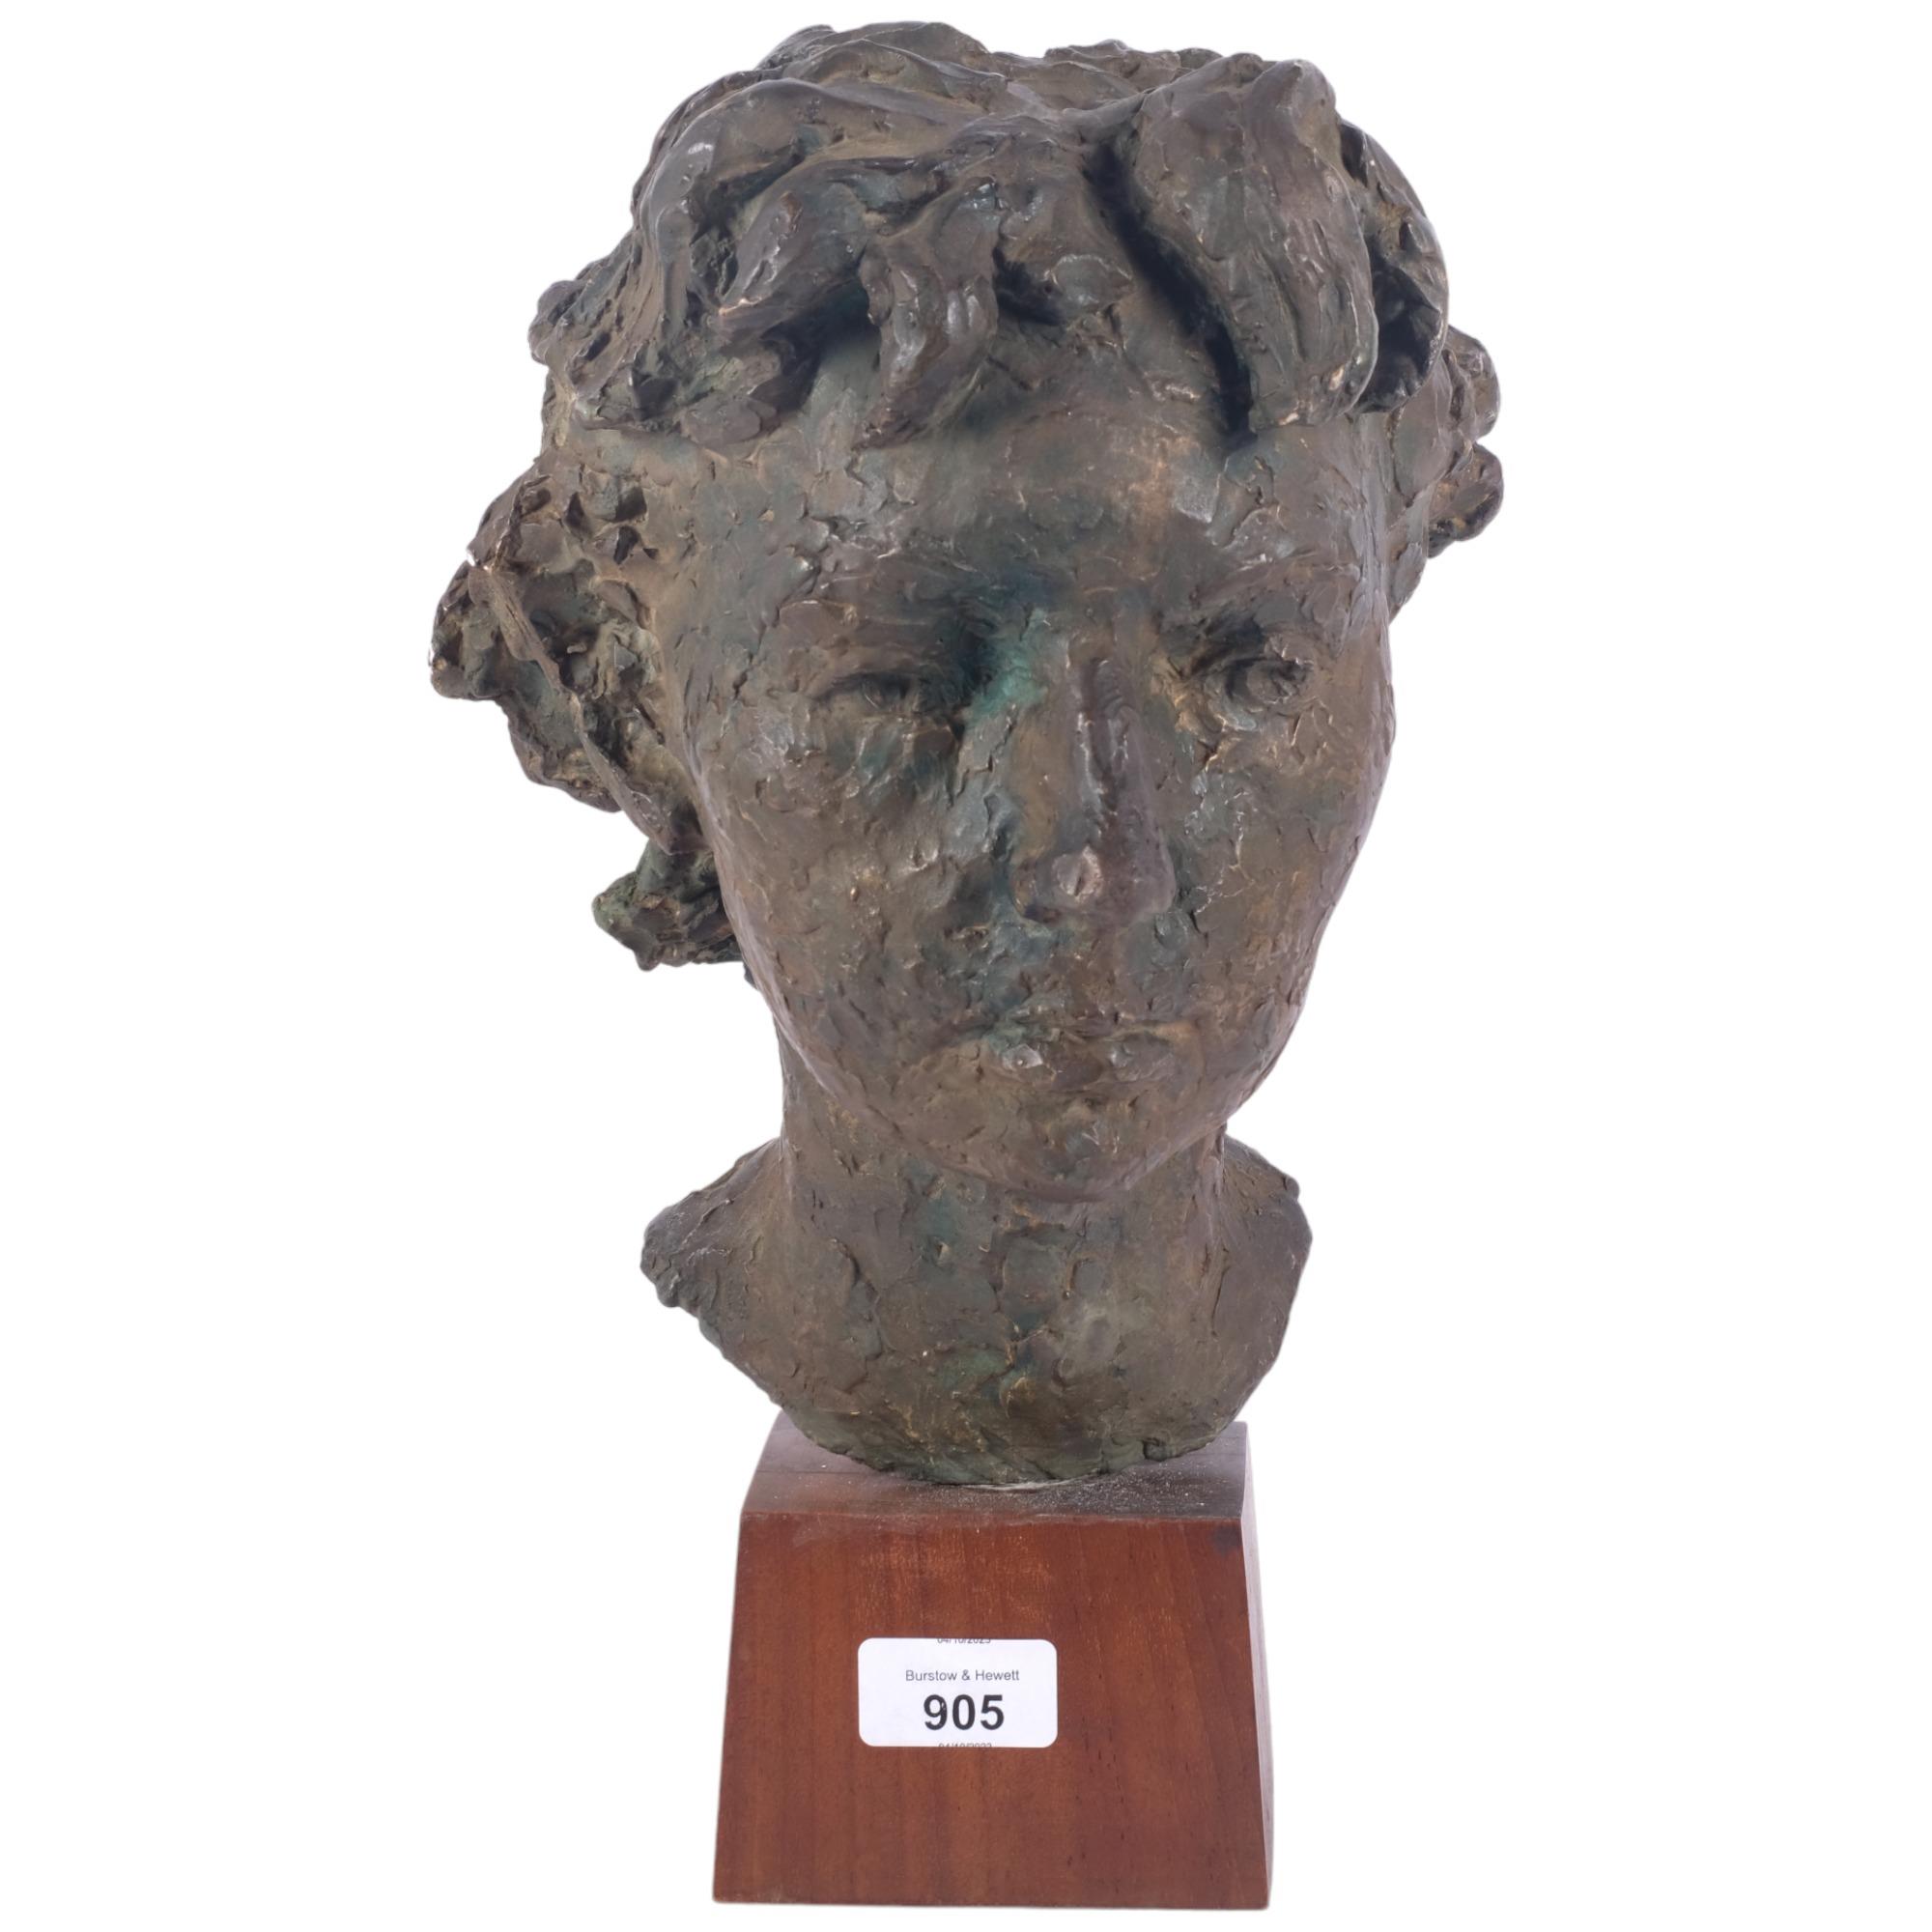 A bronze-effect female plaster bust, on wooden plinth, H34cm